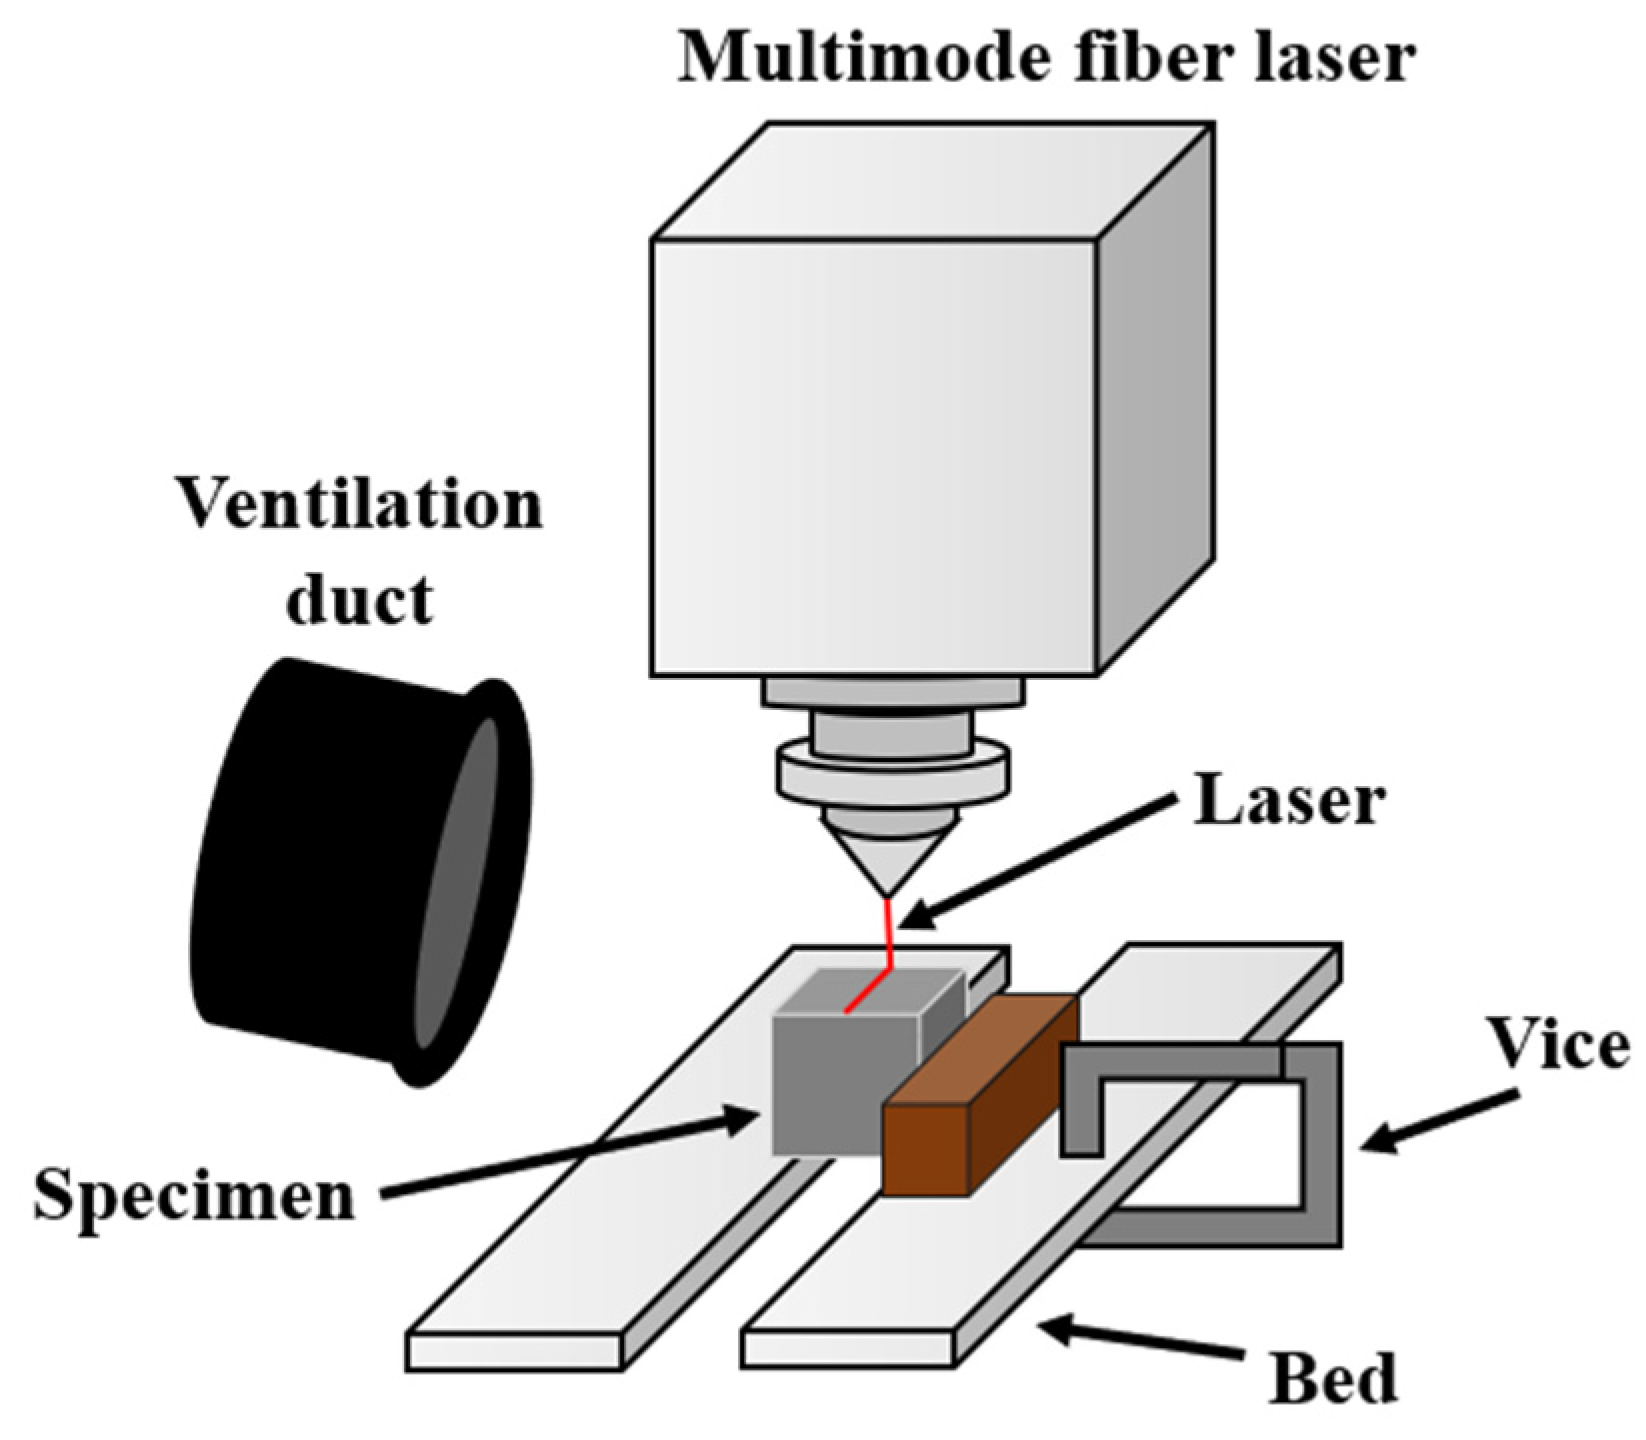 Preventing Burning When Laser Cutting Wood - Full Spectrum Laser